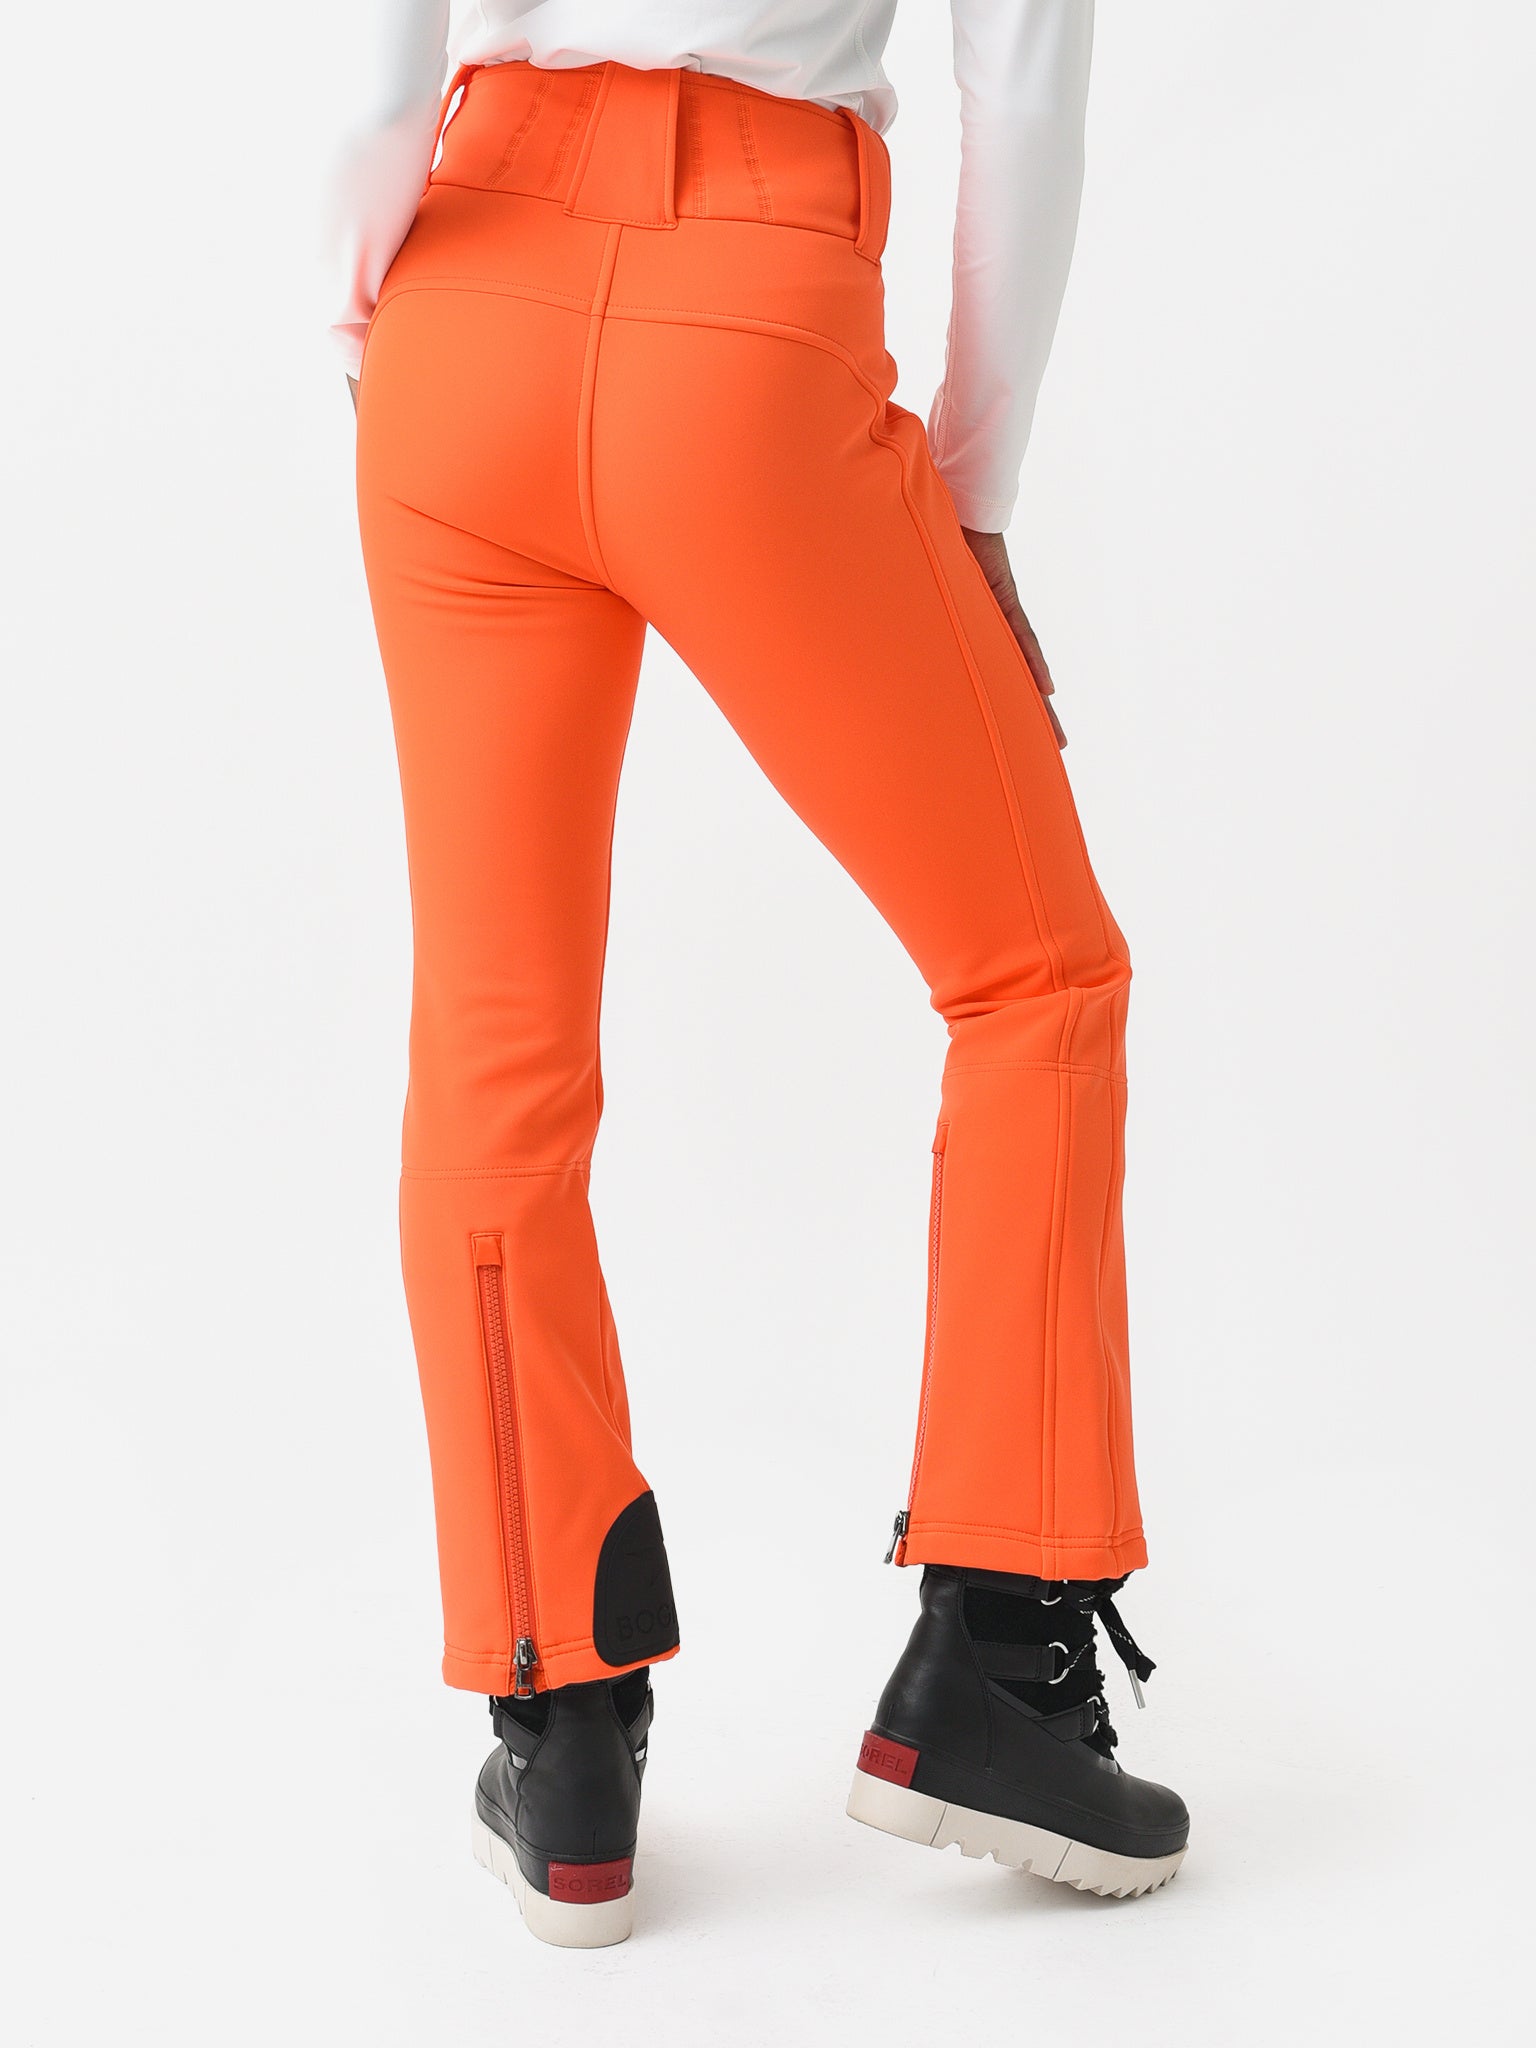 Womens Stellar Shell Pants  Orange  Stellar Equipment